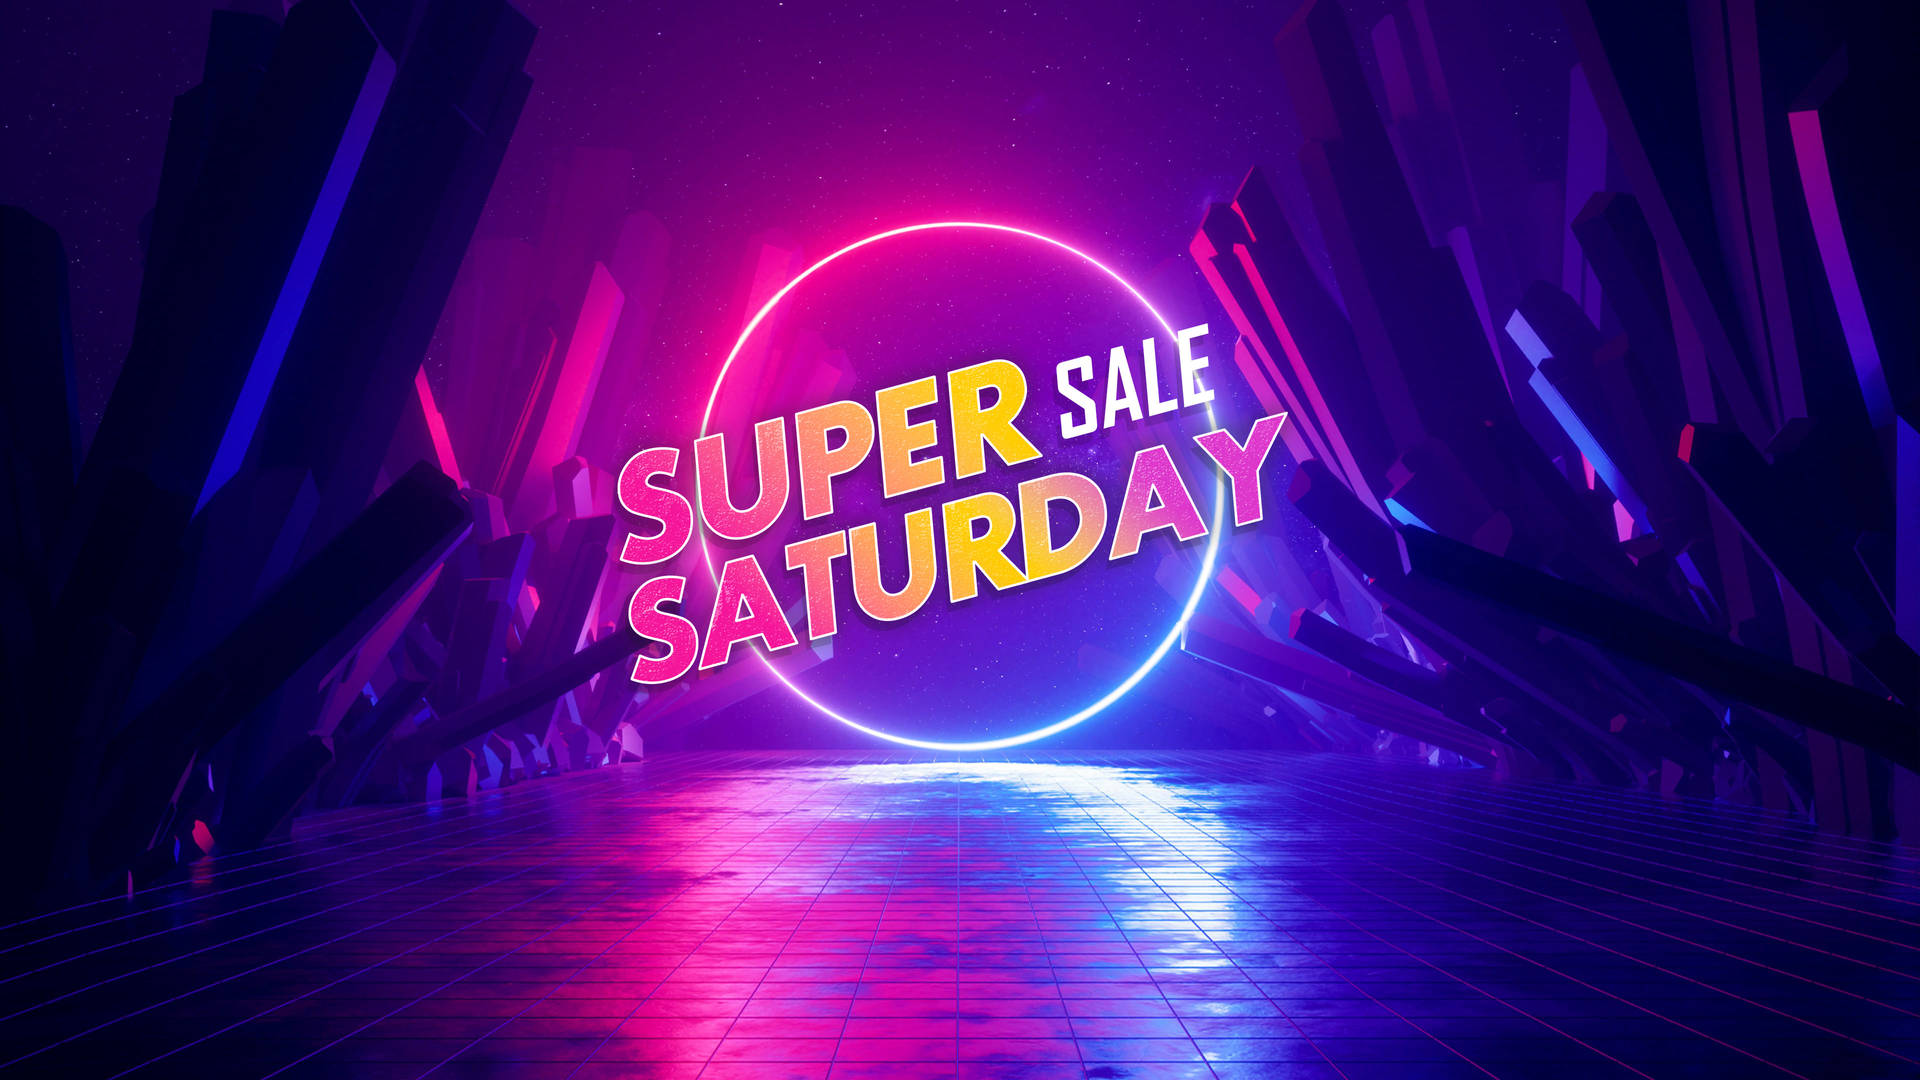 Glowing Super Saturday Sale Wallpaper